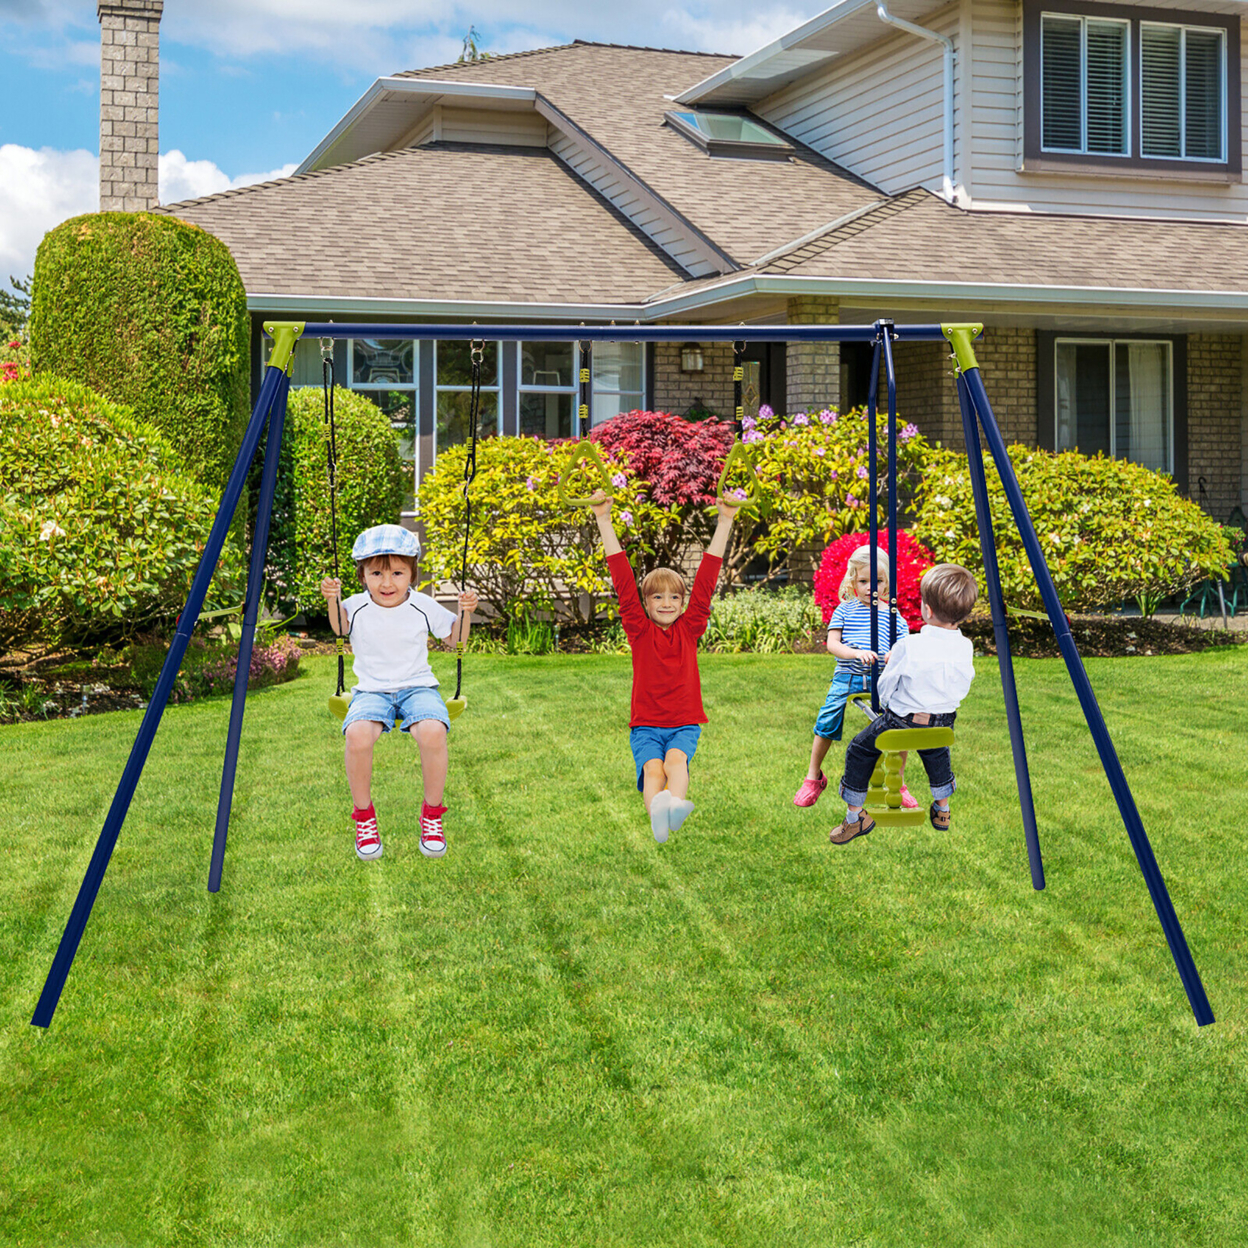 440 Lbs Swing Set 3-in-1 Kids Swing Stand W/ Swing Gym Rings Glider For Backyard